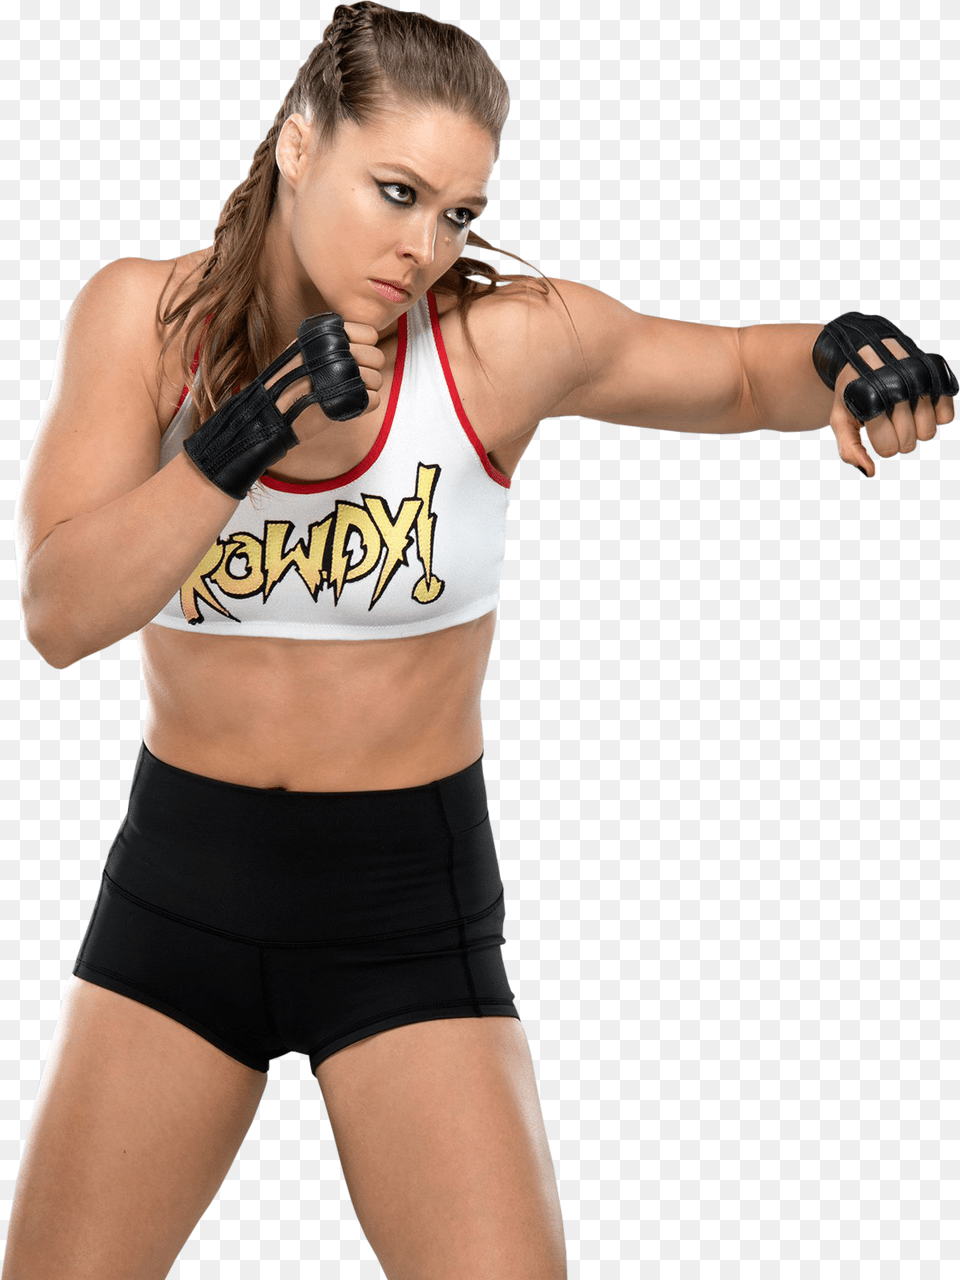 Ronda Rousey Wwe Wwe Total Divas Wwe Divas Ronda Ronda Rousey Wwe Attire, Glove, Clothing, Woman, Person Png Image